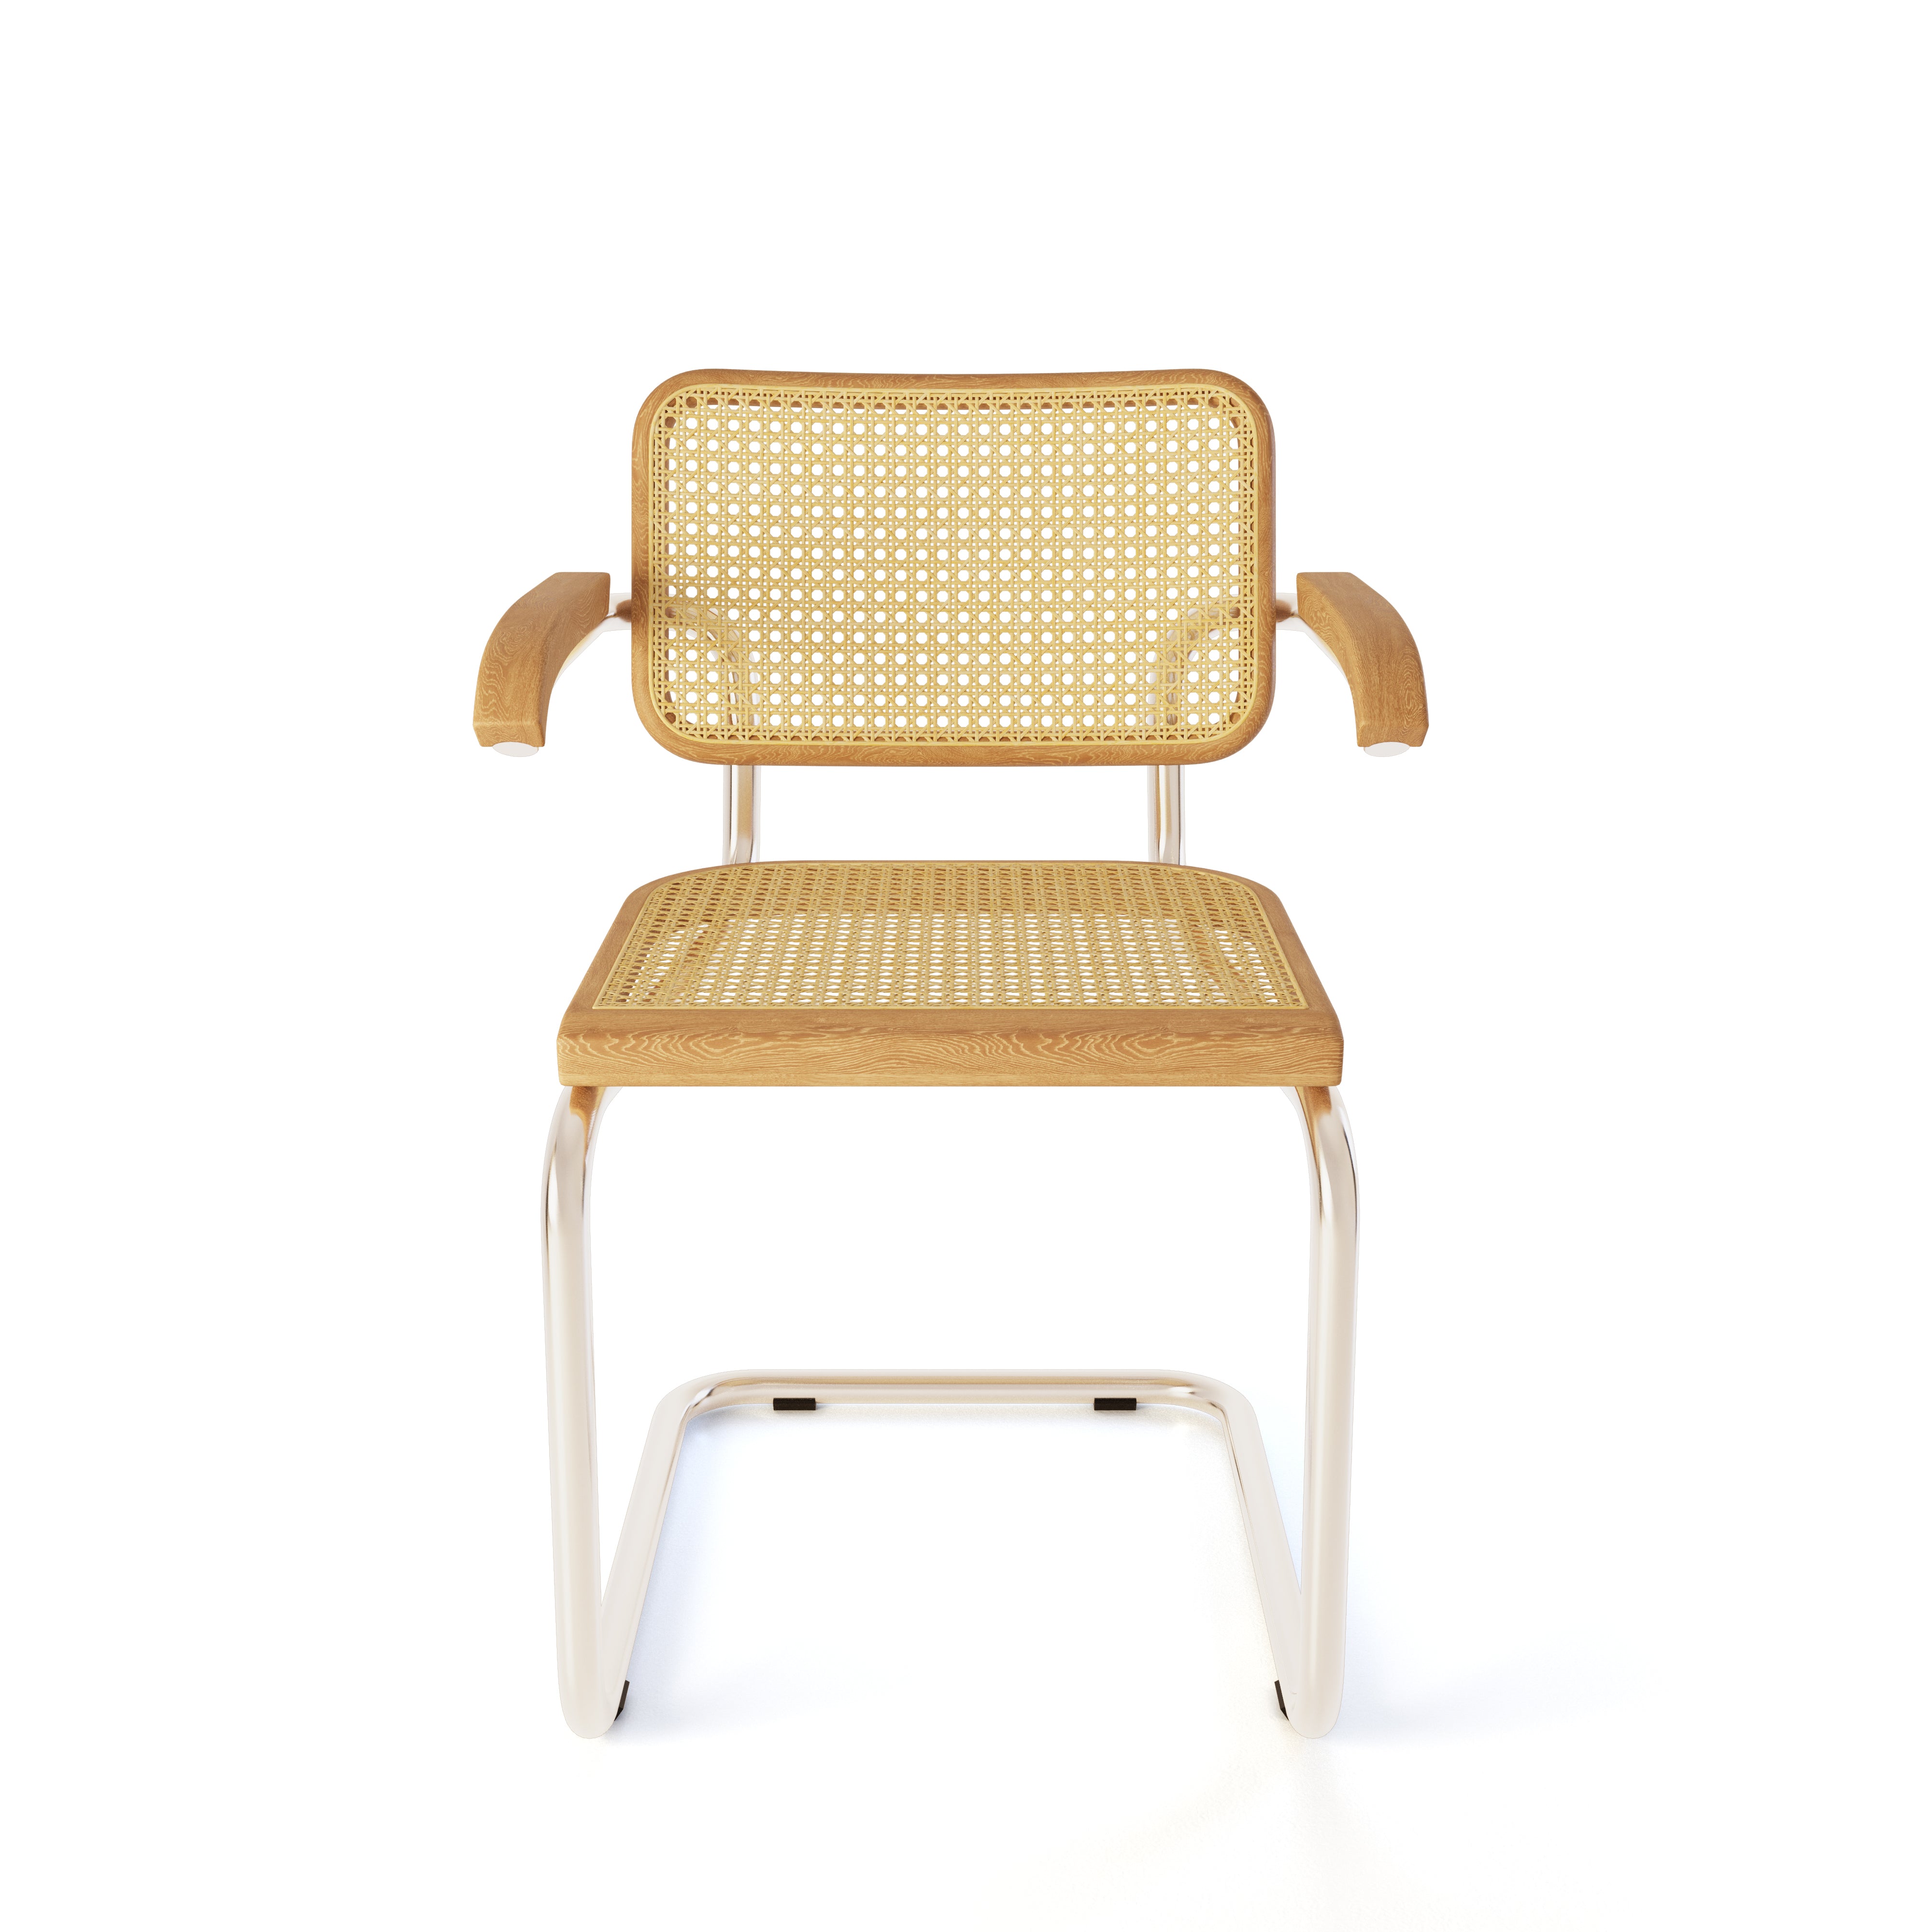 Vintage Breuer Cesca Cane Rattan Retro Chair Upholstered Improve 